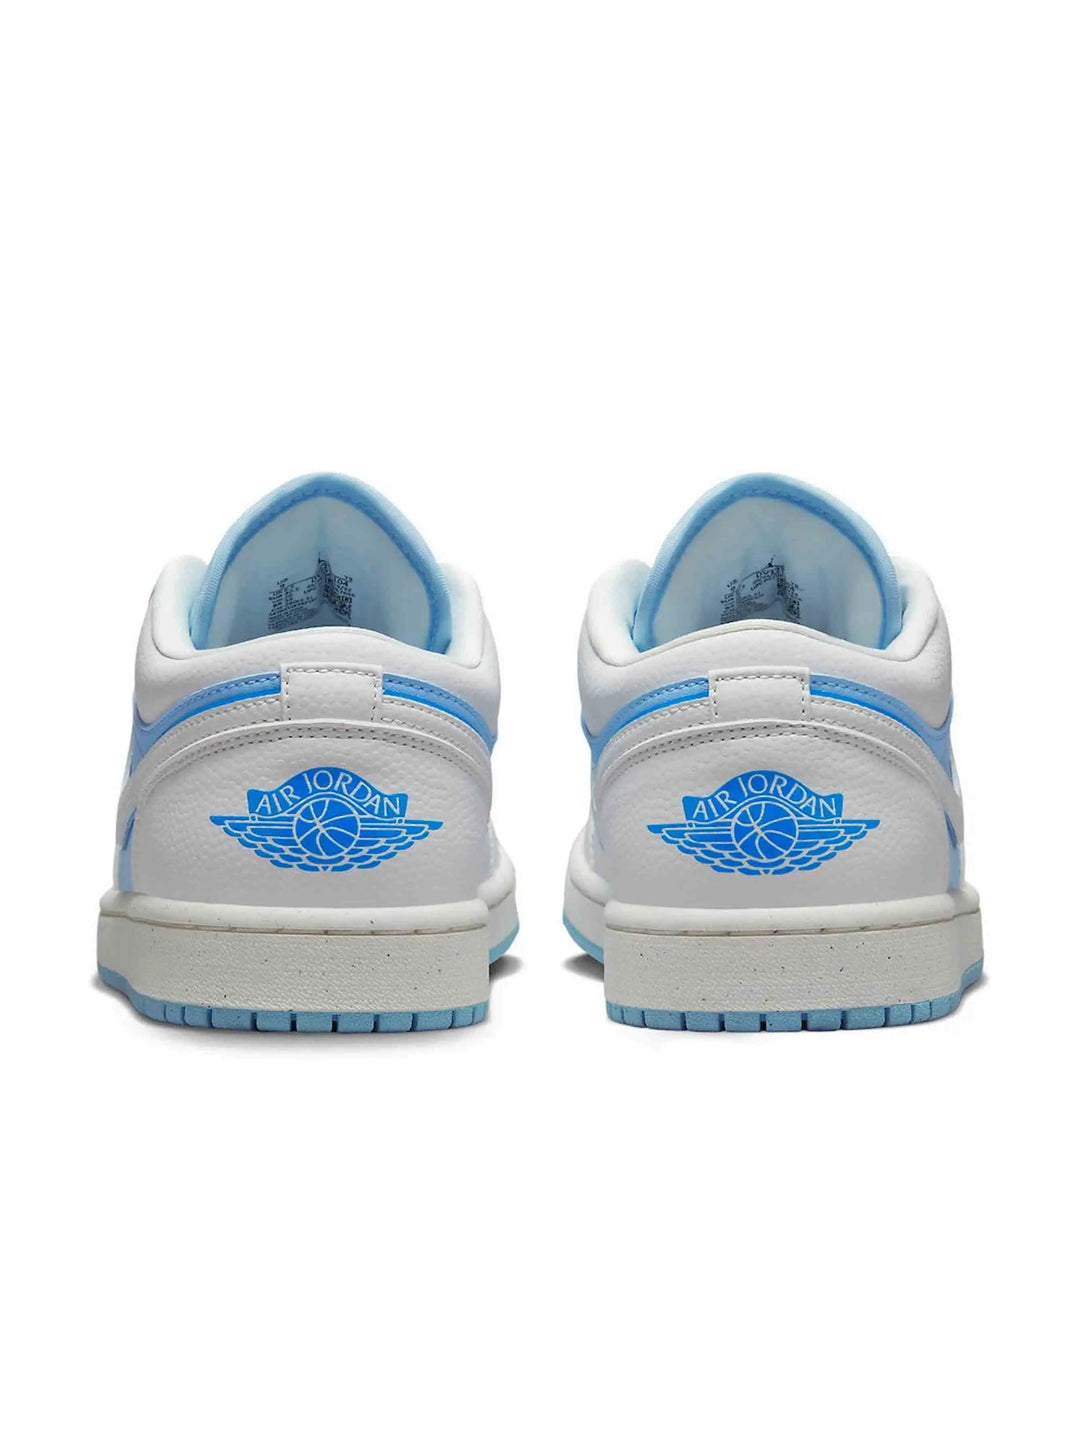 Nike Air Jordan 1 Low SE Reverse Ice Blue (W) - Prior